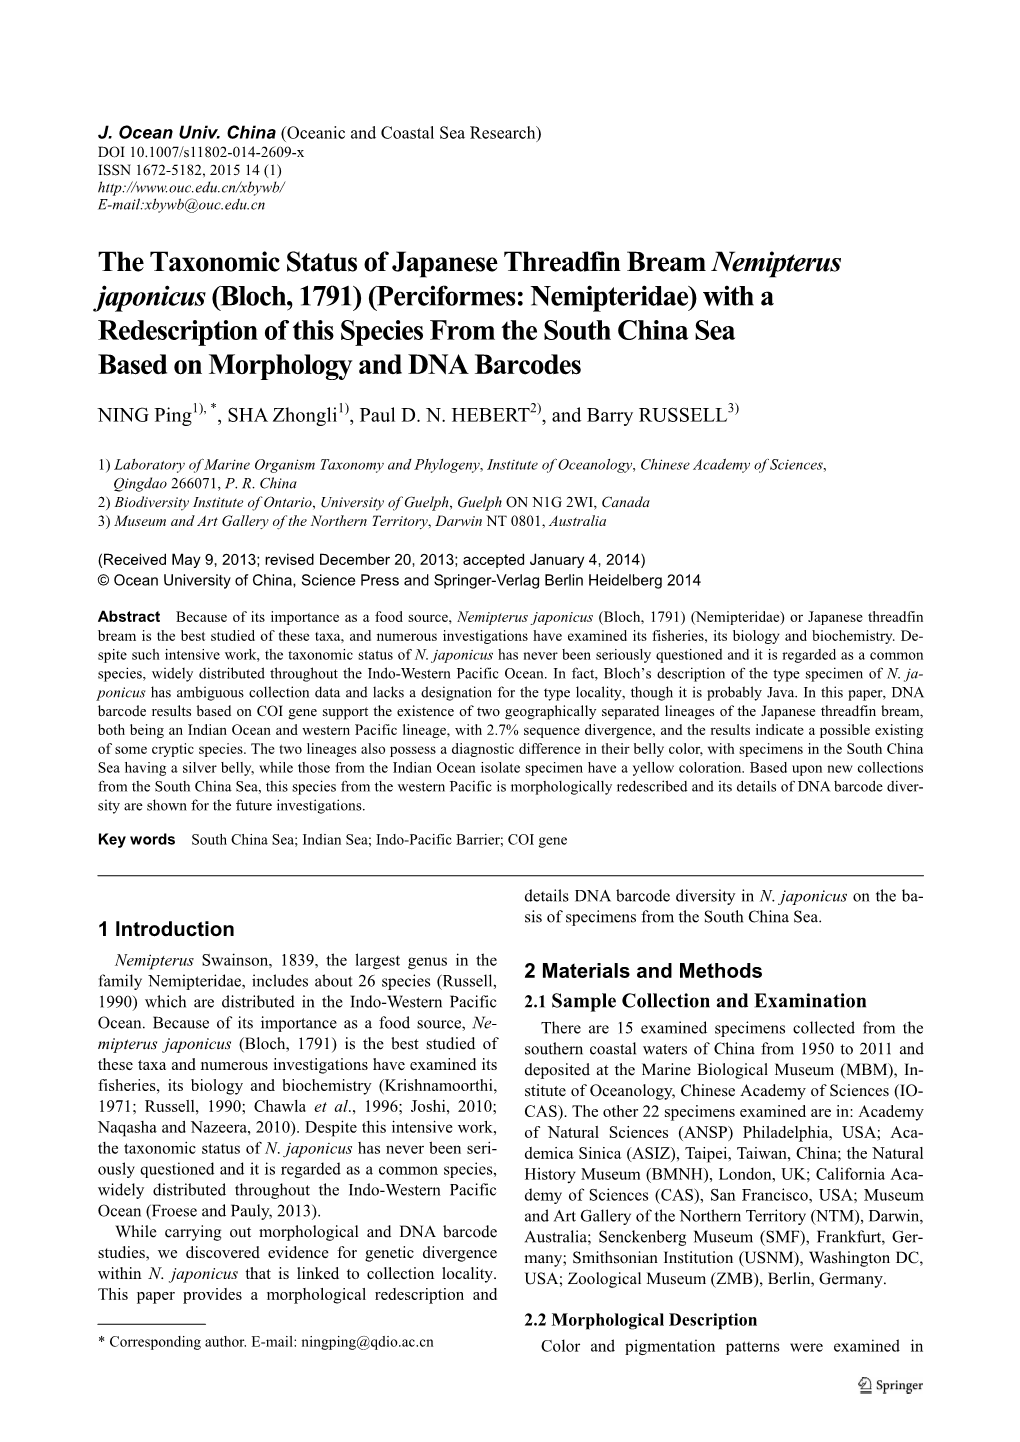 The Taxonomic Status of Japanese Threadfin Bream Nemipterus Japonicus(Bloch, 1791)